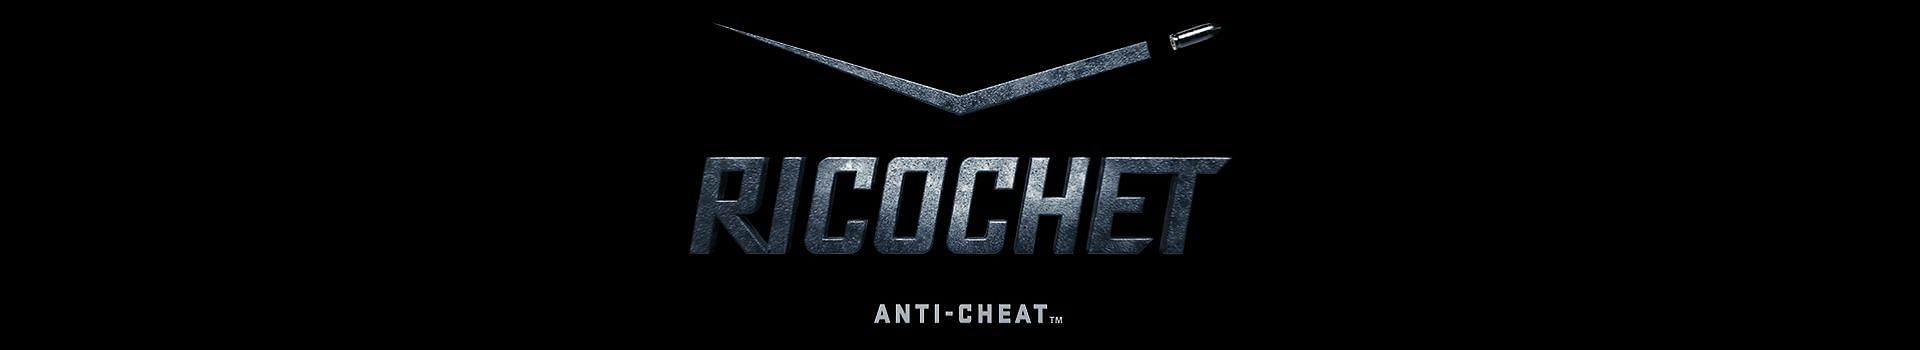 RICOCHET Anti Cheat (Image via Activision)